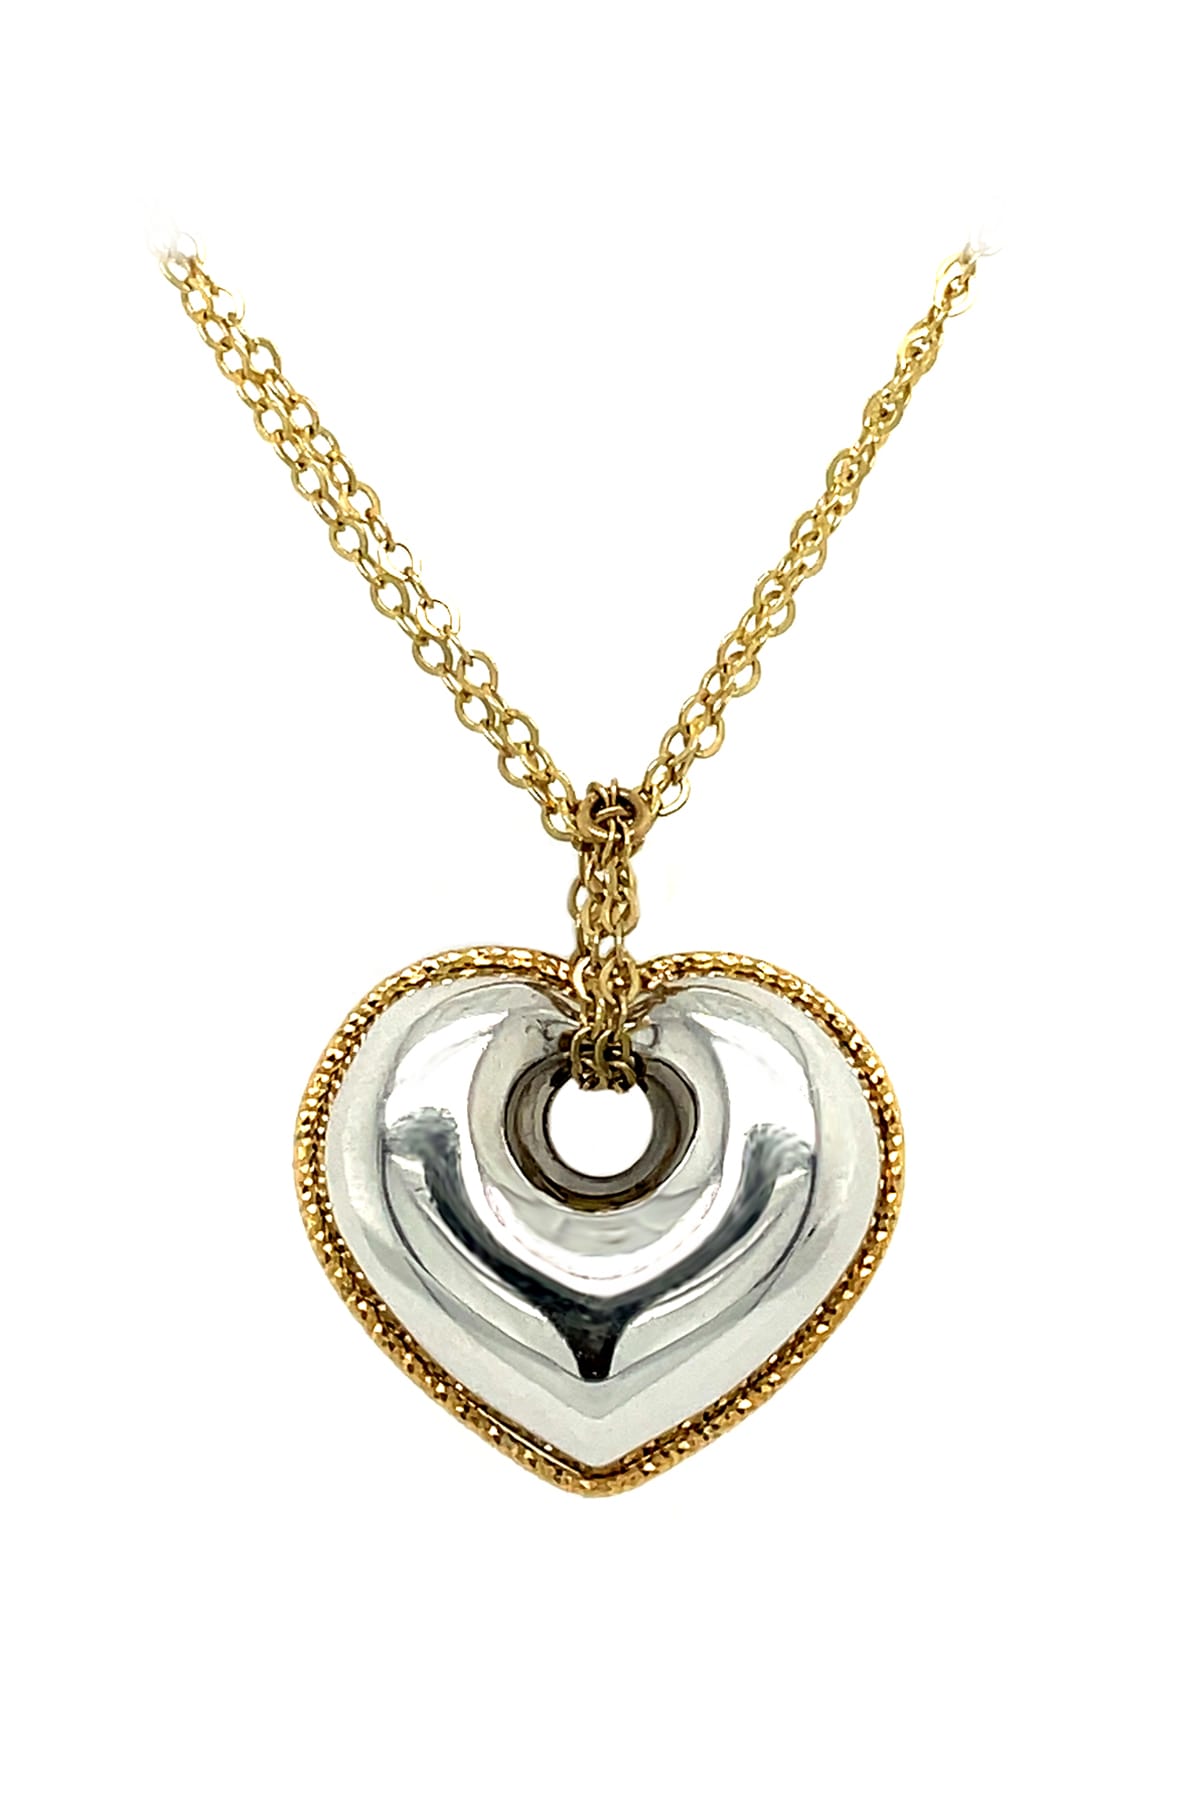 Gold Puff Heart Pendant available at LeGassick Diamonds and Jewellery Gold Coast, Australia.